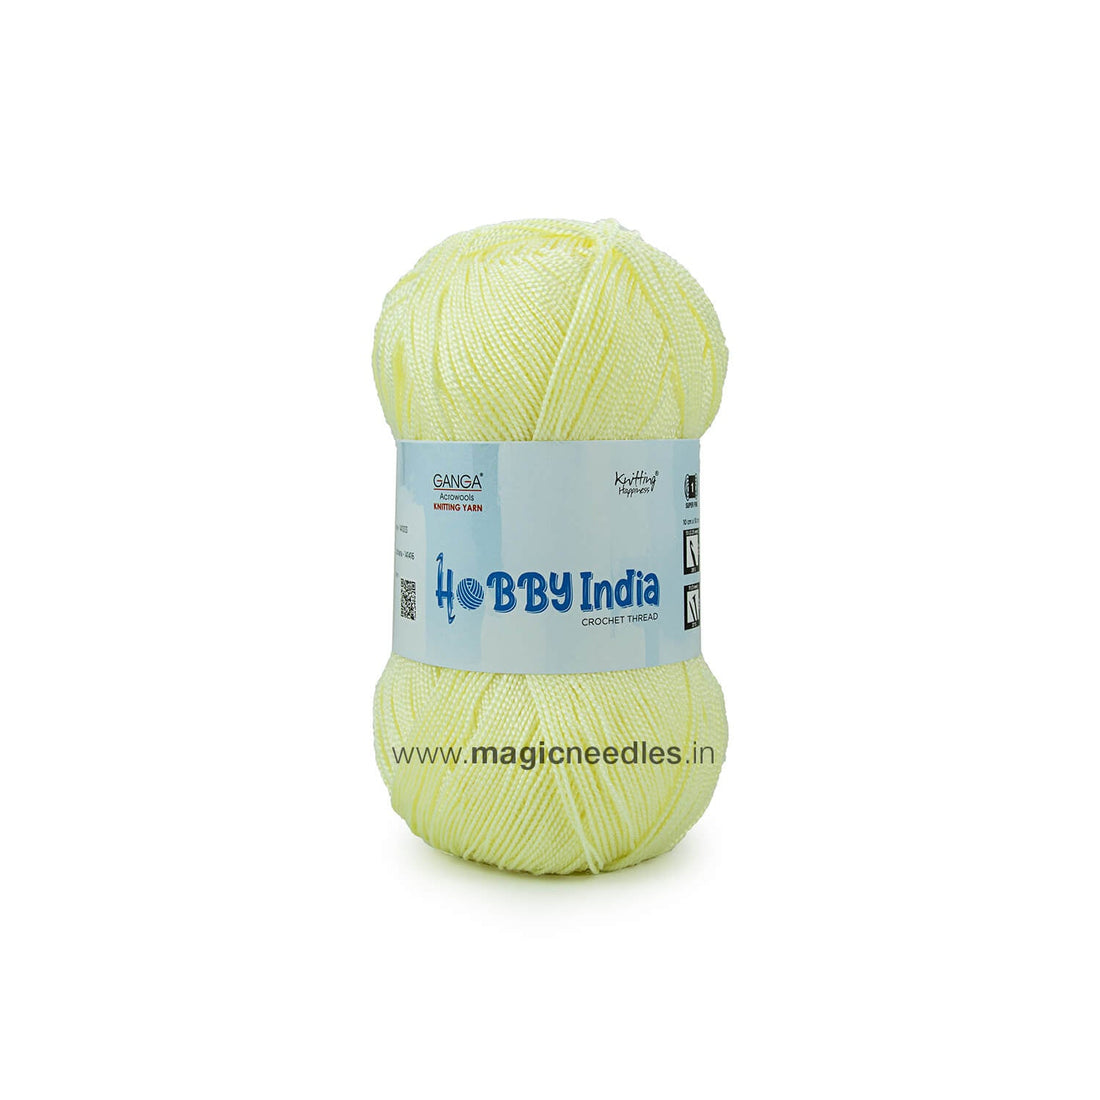 Ganga Hobby India Crochet Thread - Yellow CUD50 new 75